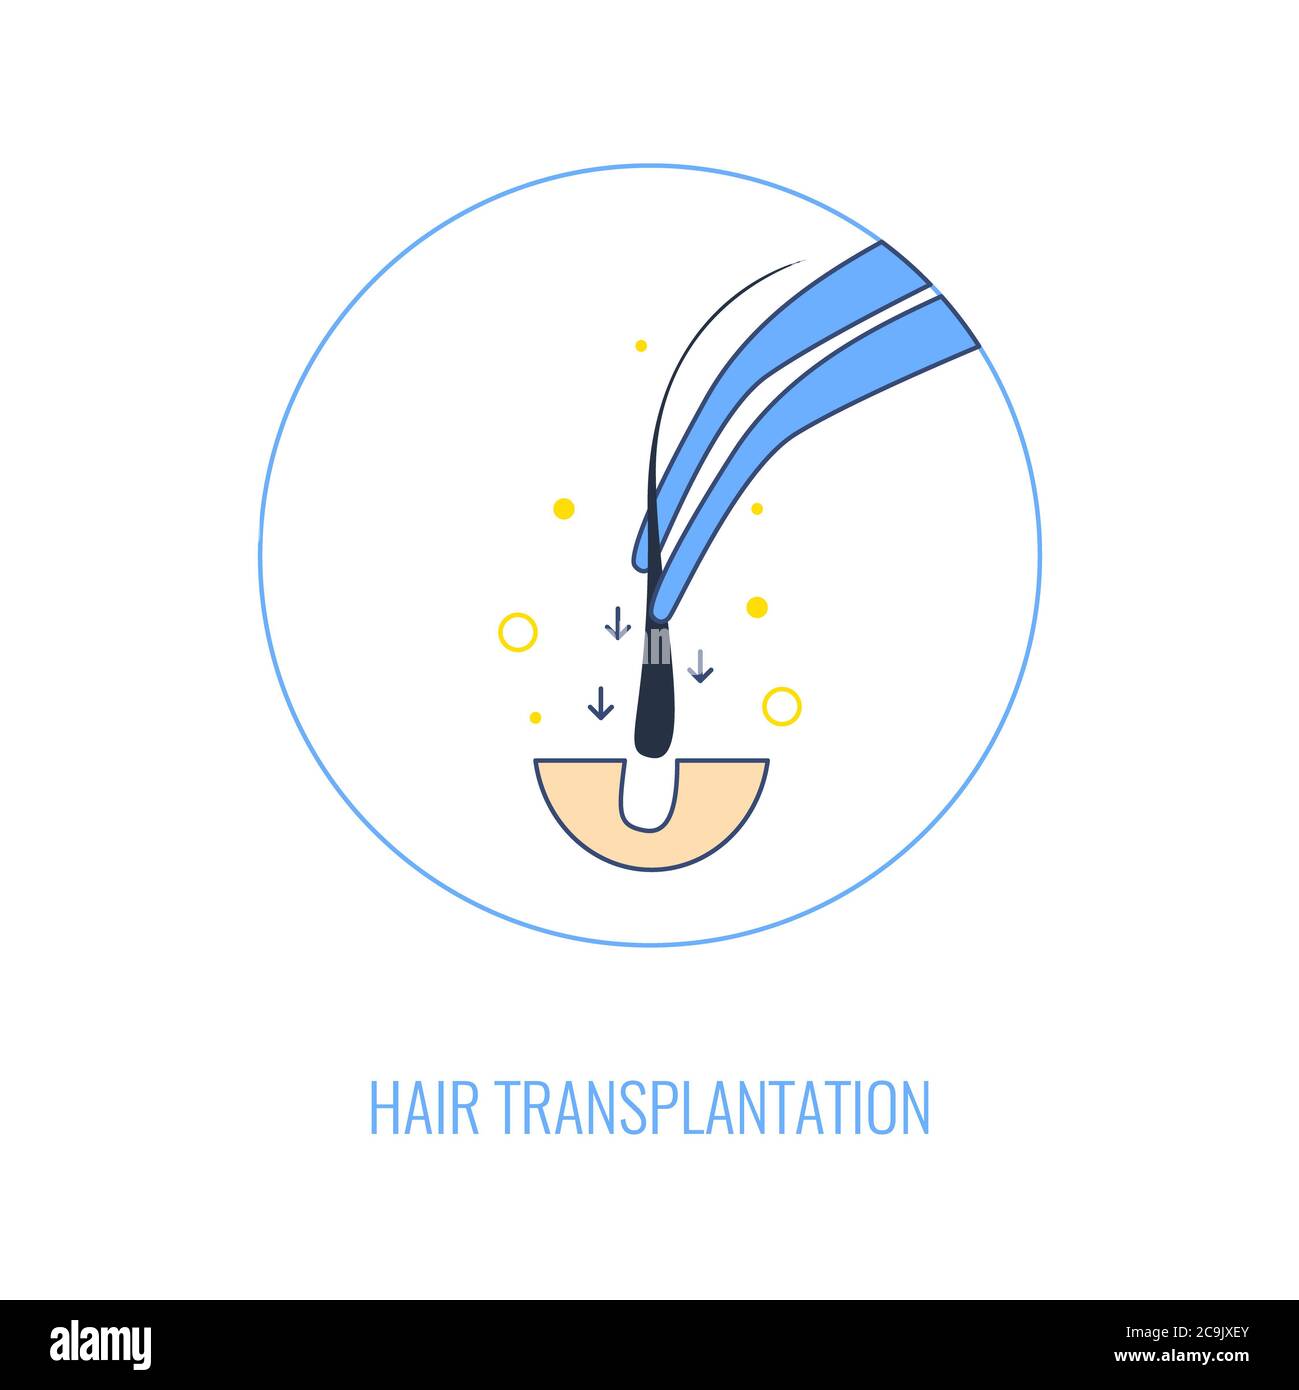 Hair transplant procedure, illustration. Stock Photo